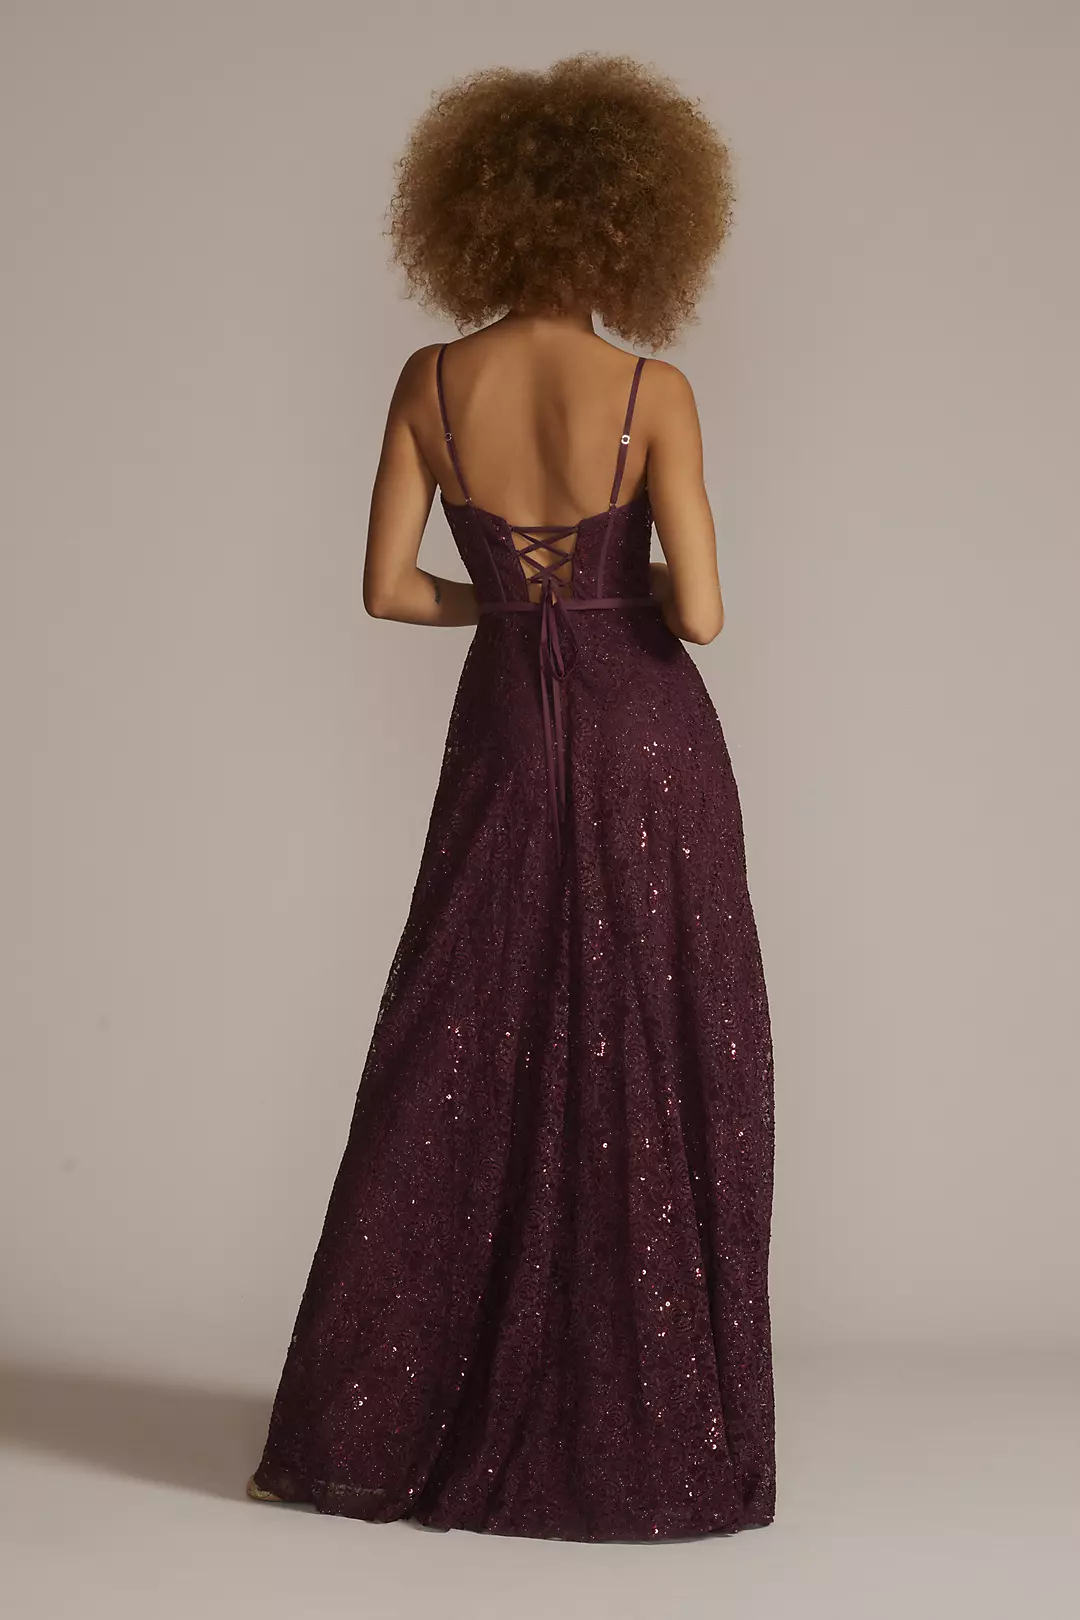 Sparkle Lace Dress with Corset Bodice Image 2